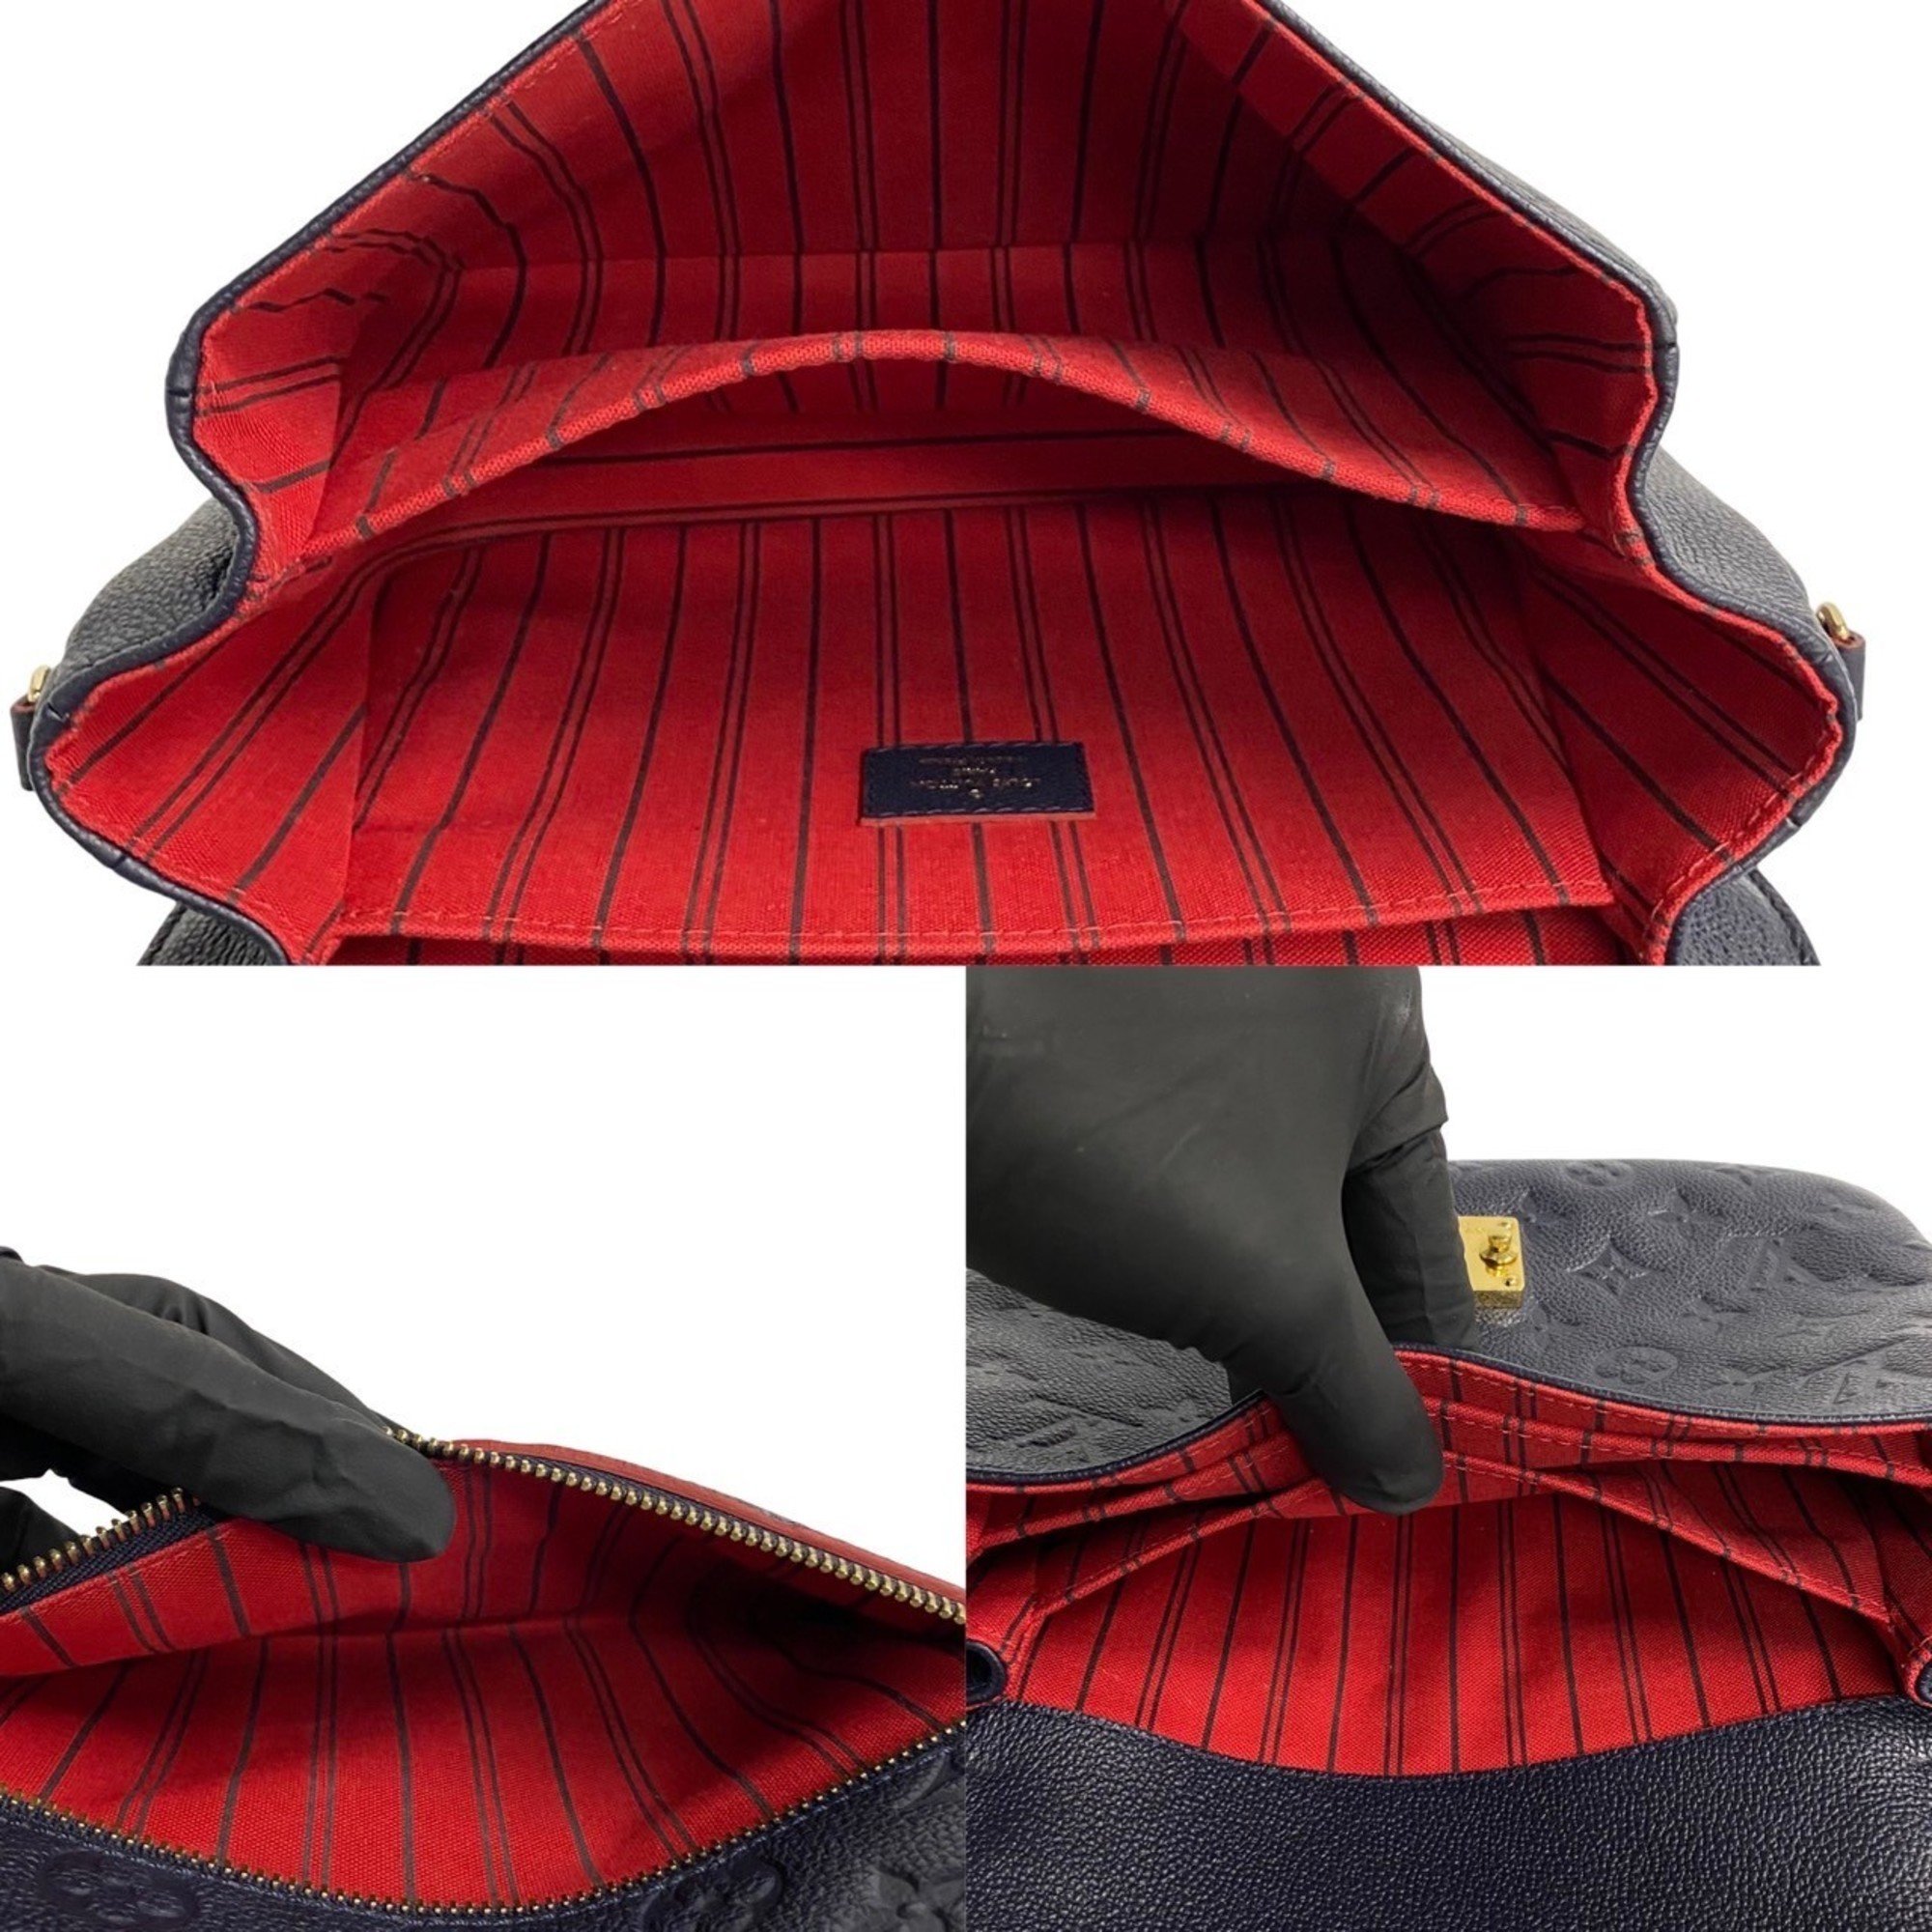 LOUIS VUITTON Louis Vuitton Pochette Metis MM Monogram Empreinte 2way Handbag Shoulder Bag Navy 69739